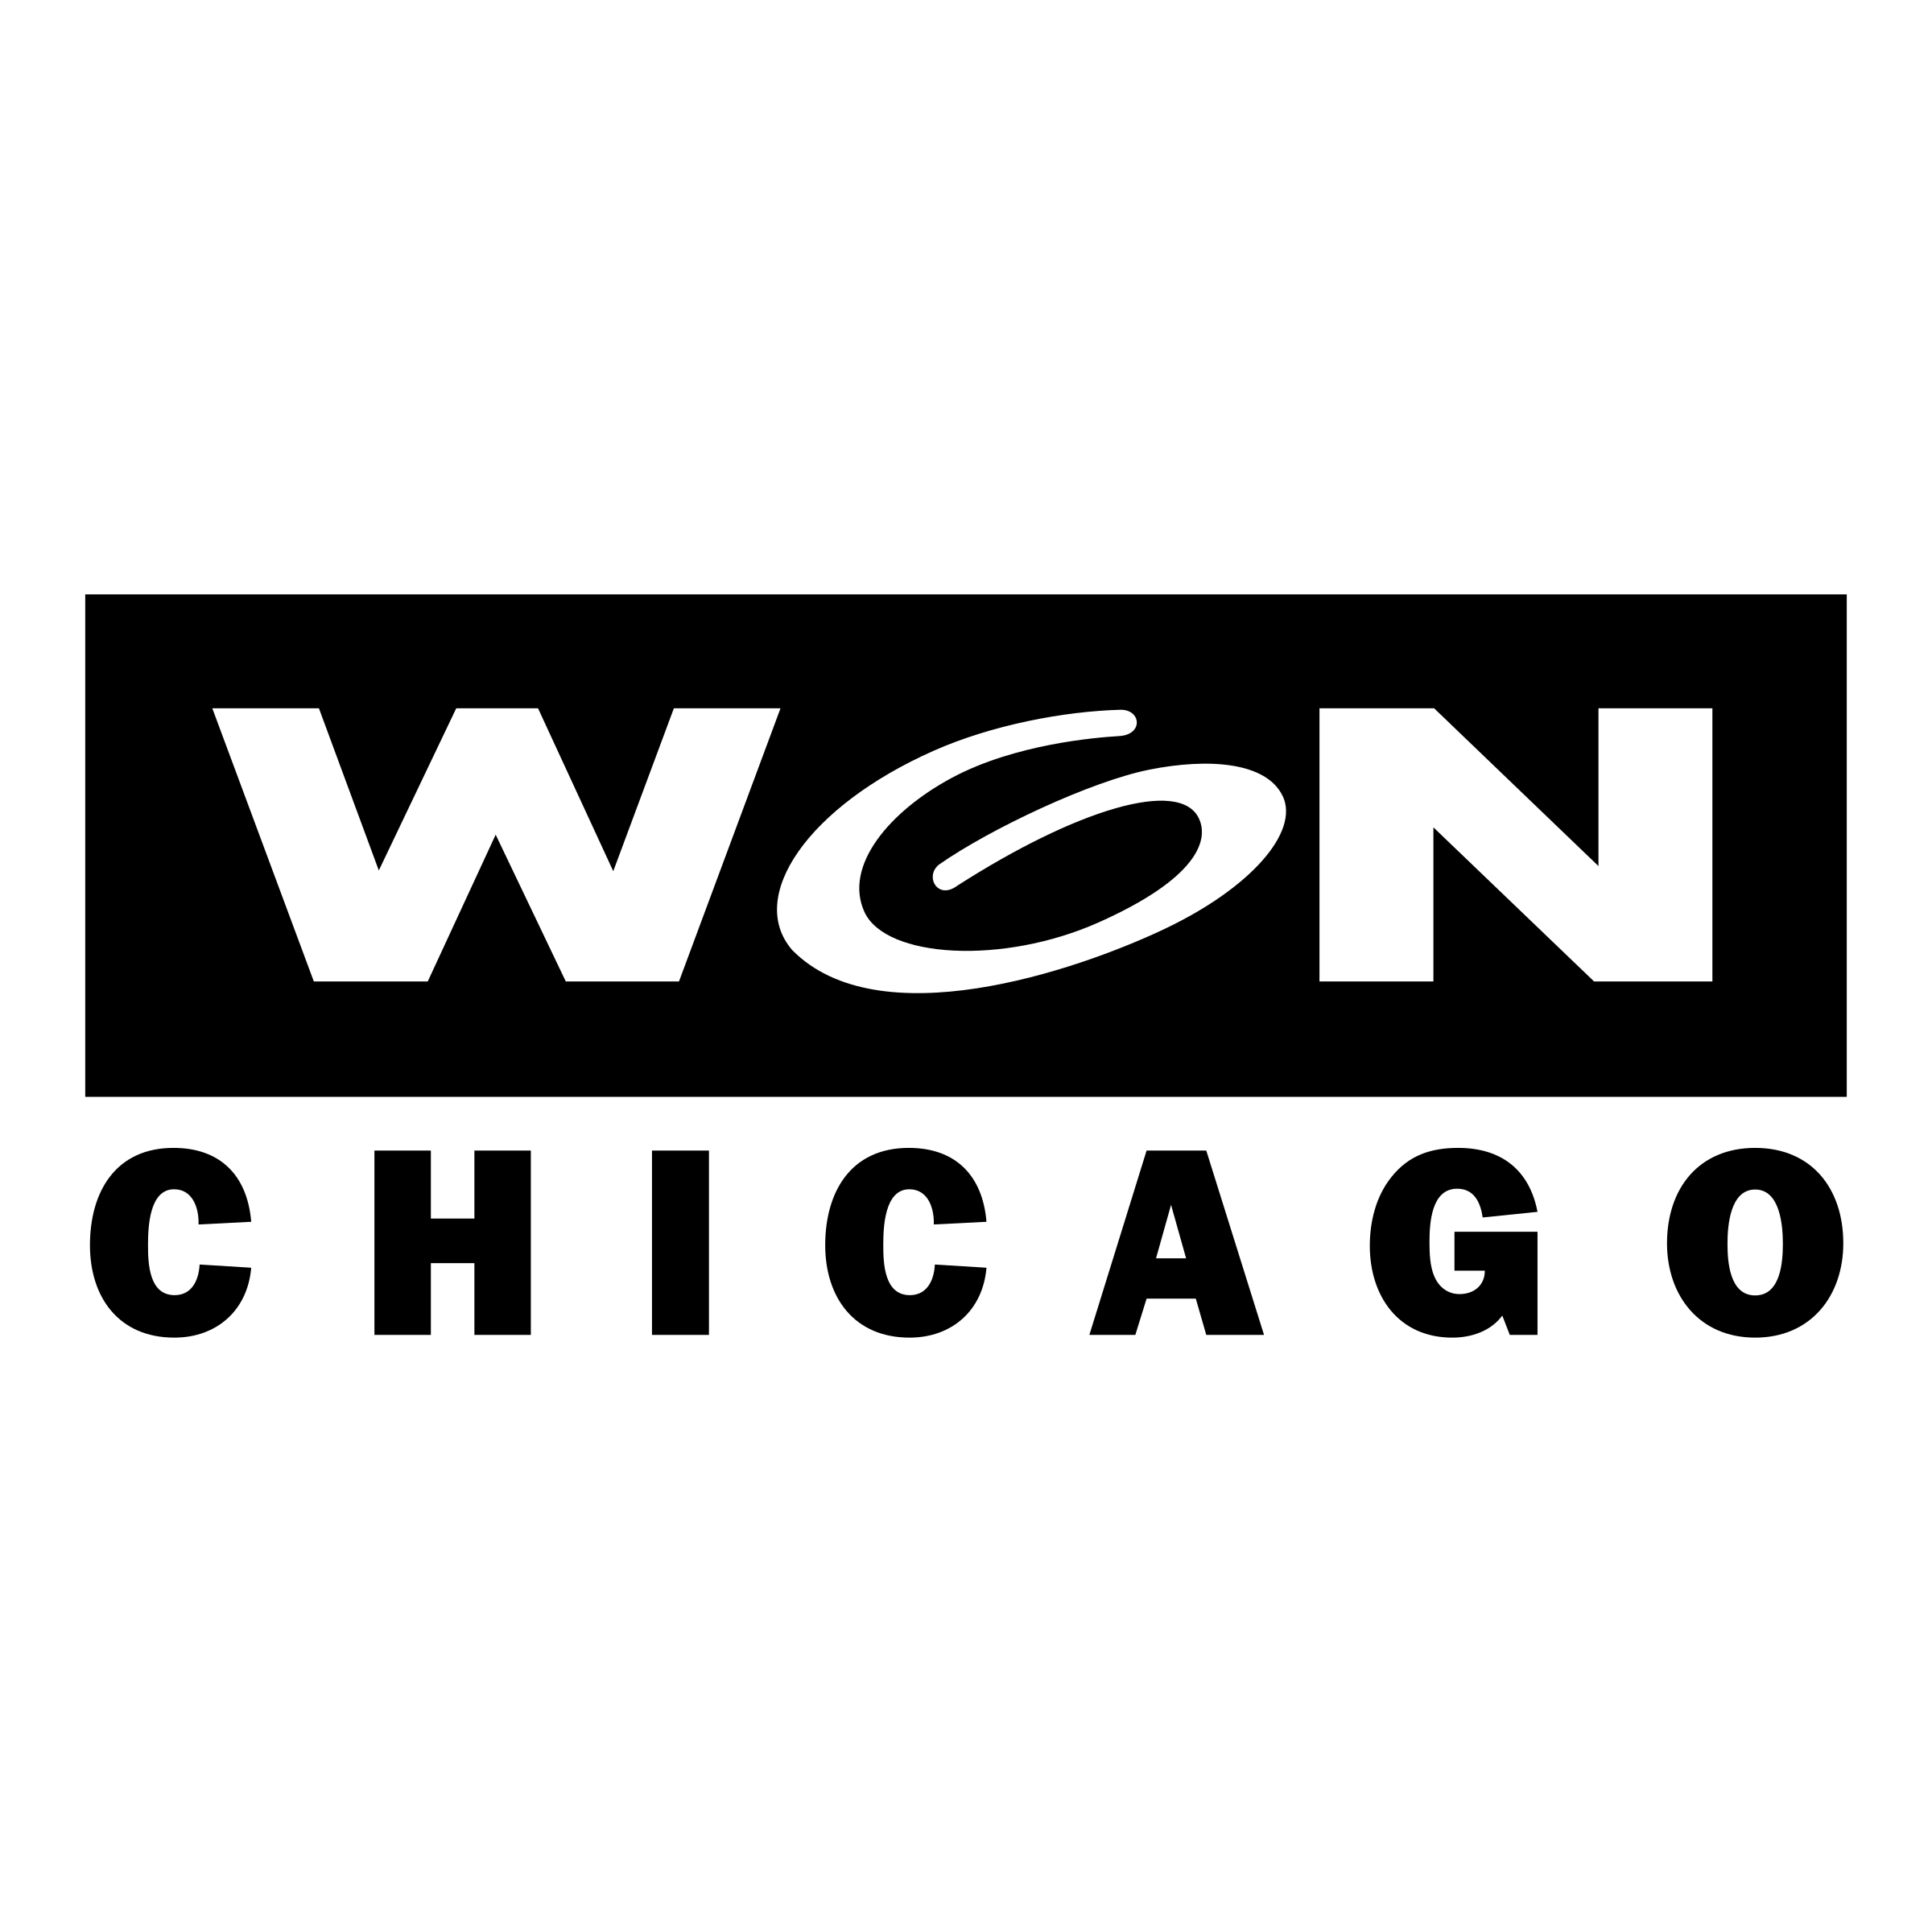 WGN Chicago Logo - WGN Chicago Logo PNG Transparent & SVG Vector - Freebie Supply